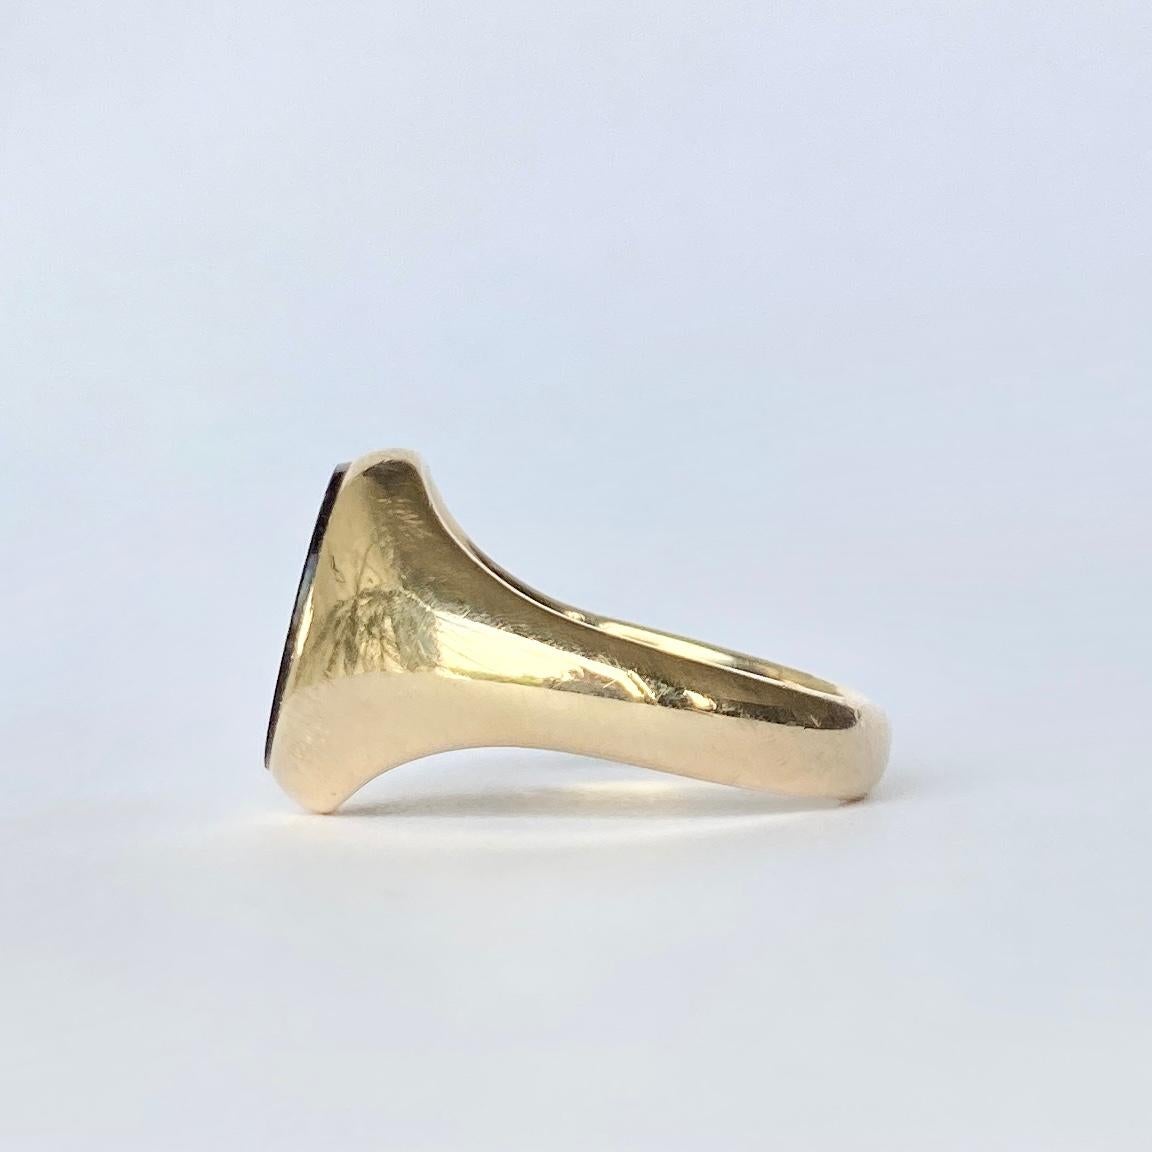 9 carat gold onyx ring